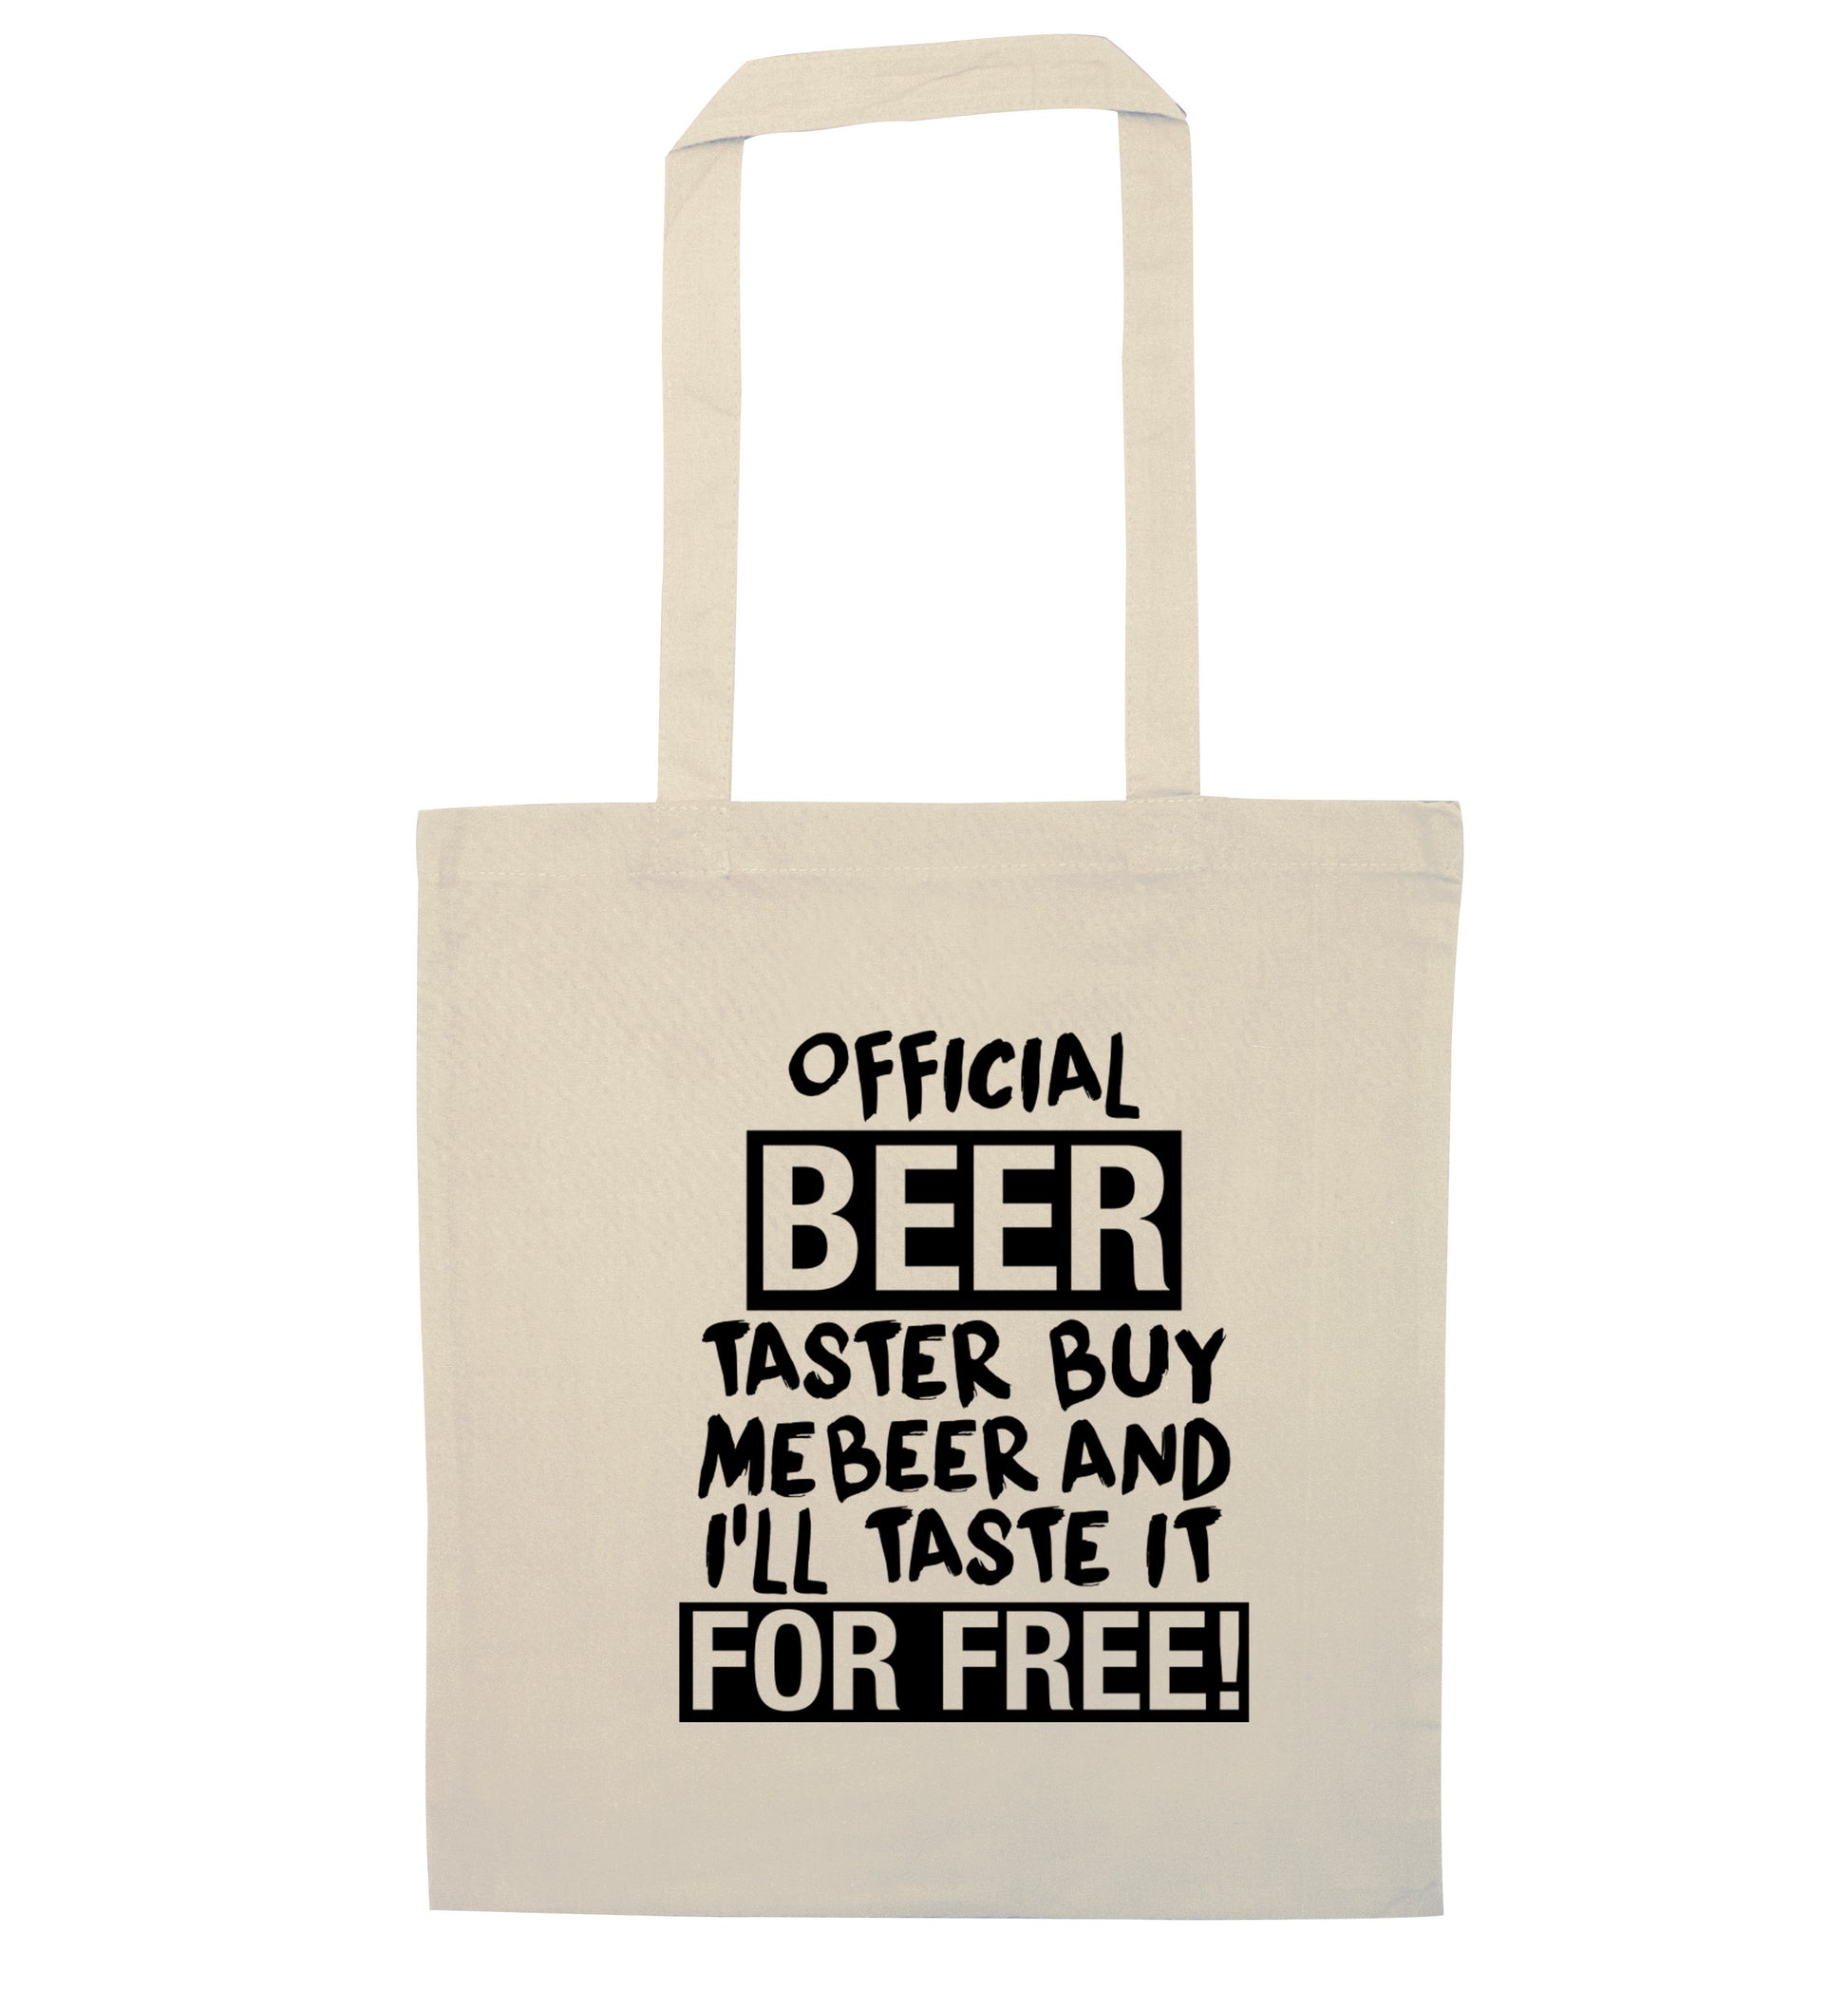 Official beer taster buy me beer and I'll taste it for free! natural tote bag